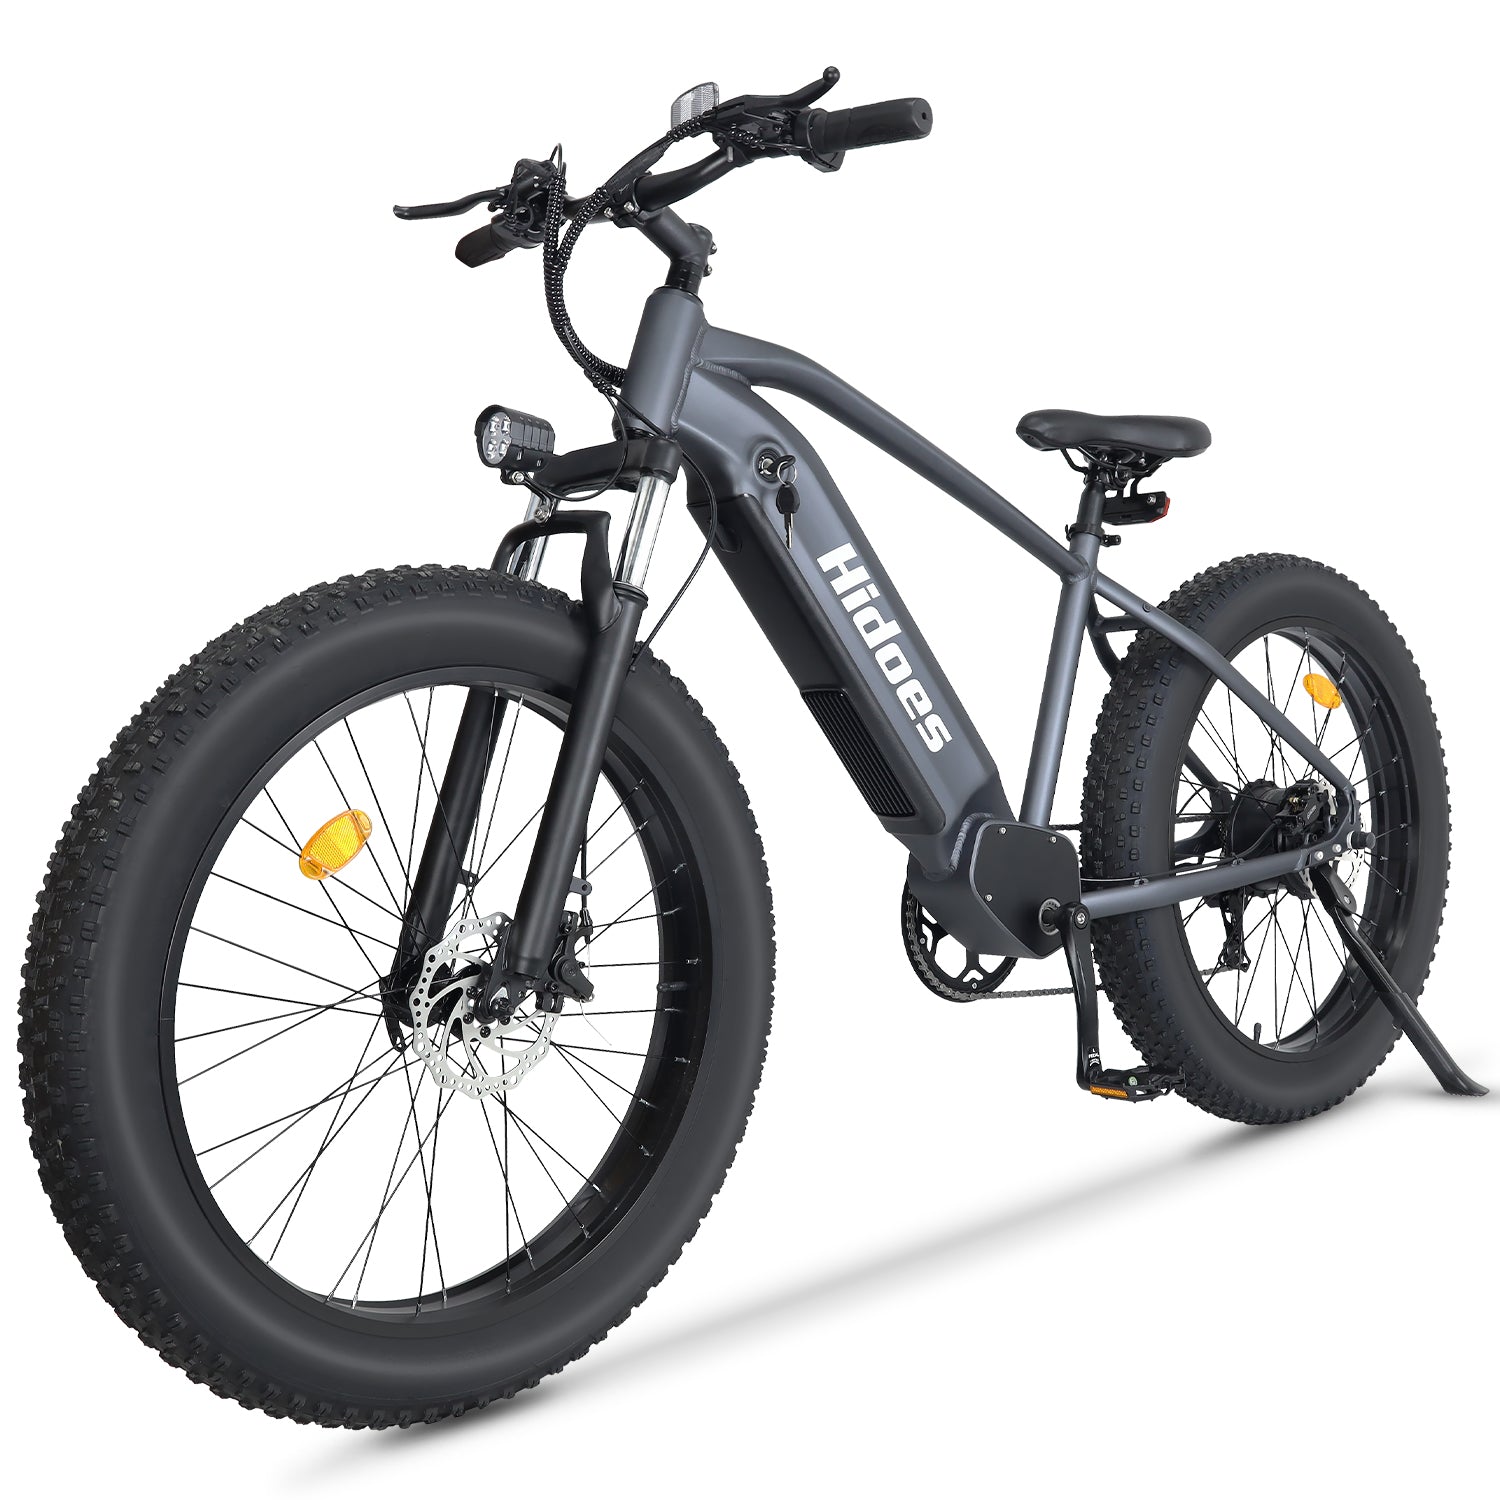 Hidoes B5 All Terrain Electric Bike online, best fat tire electric cruiser bike online